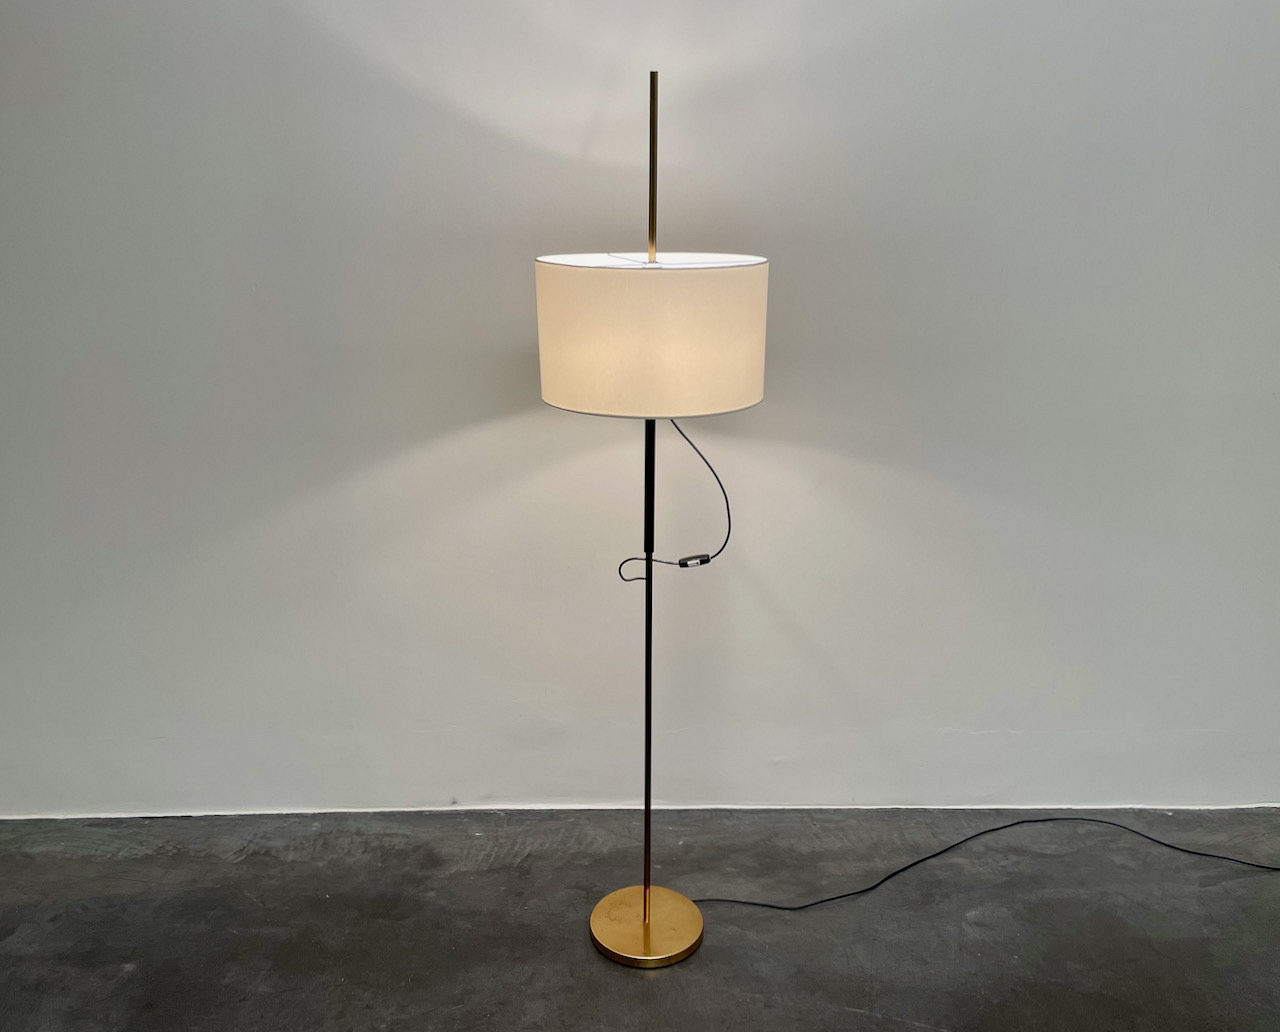 Lamp by G. Ostuni